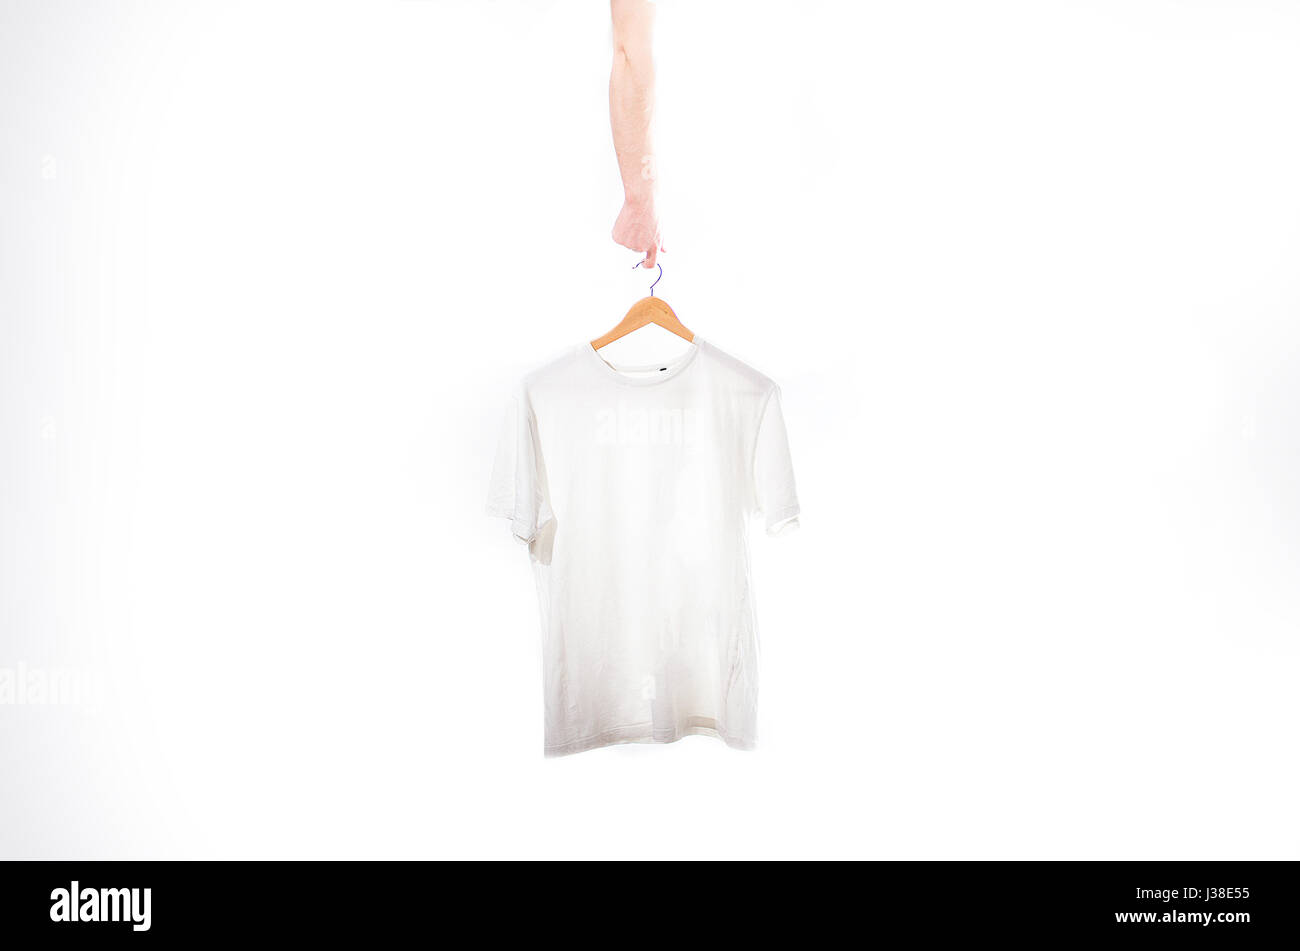 https://c8.alamy.com/comp/J38E55/hand-holds-a-white-t-shirt-on-a-hanger-on-a-white-J38E55.jpg